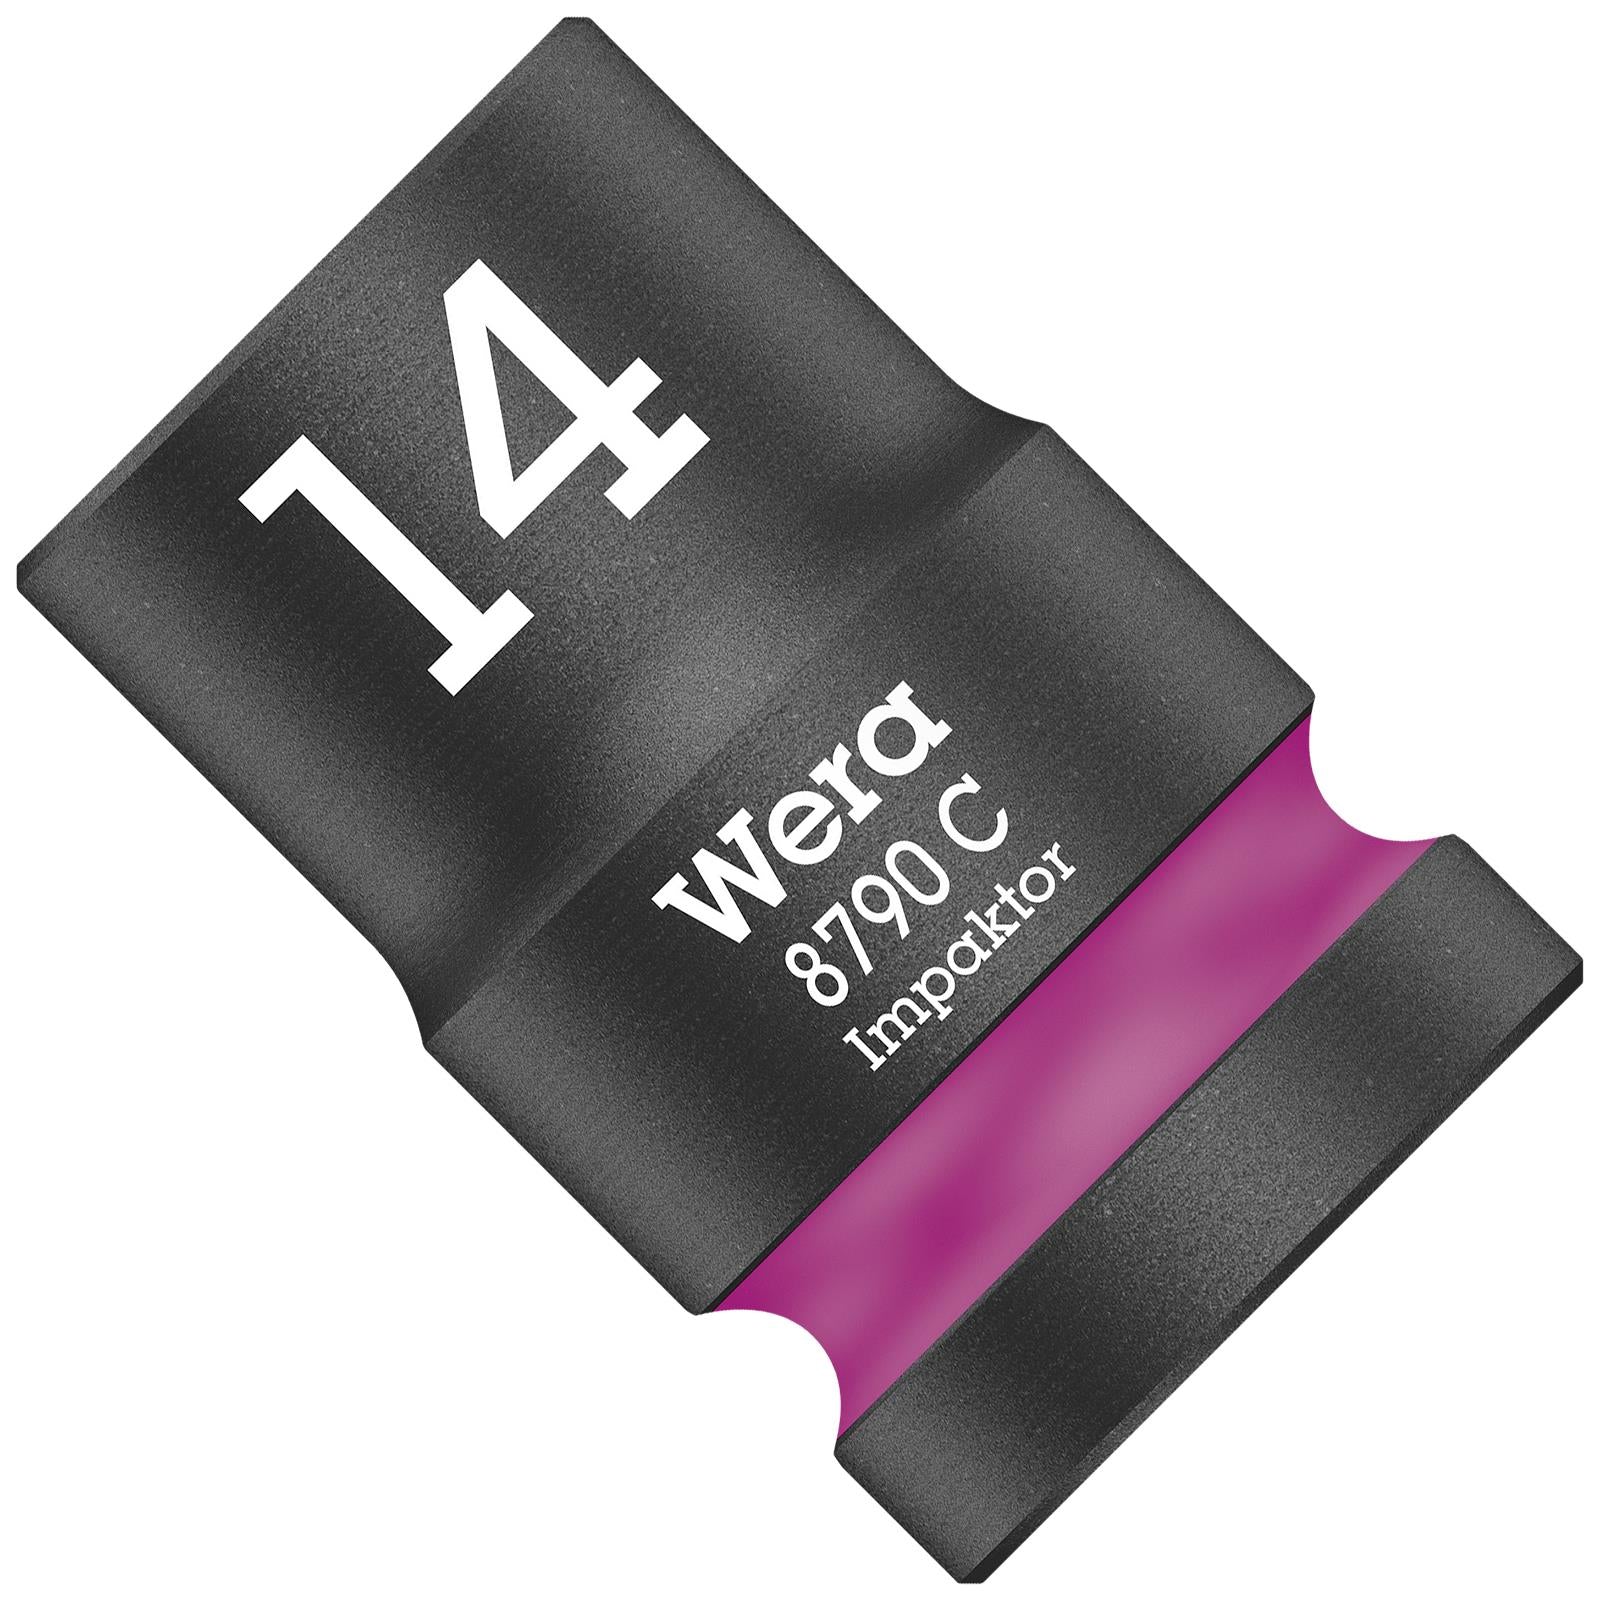 Wera Impact Socket Impaktor with 1/2" Drive Zyklop 8790 C 14mm x 38mm